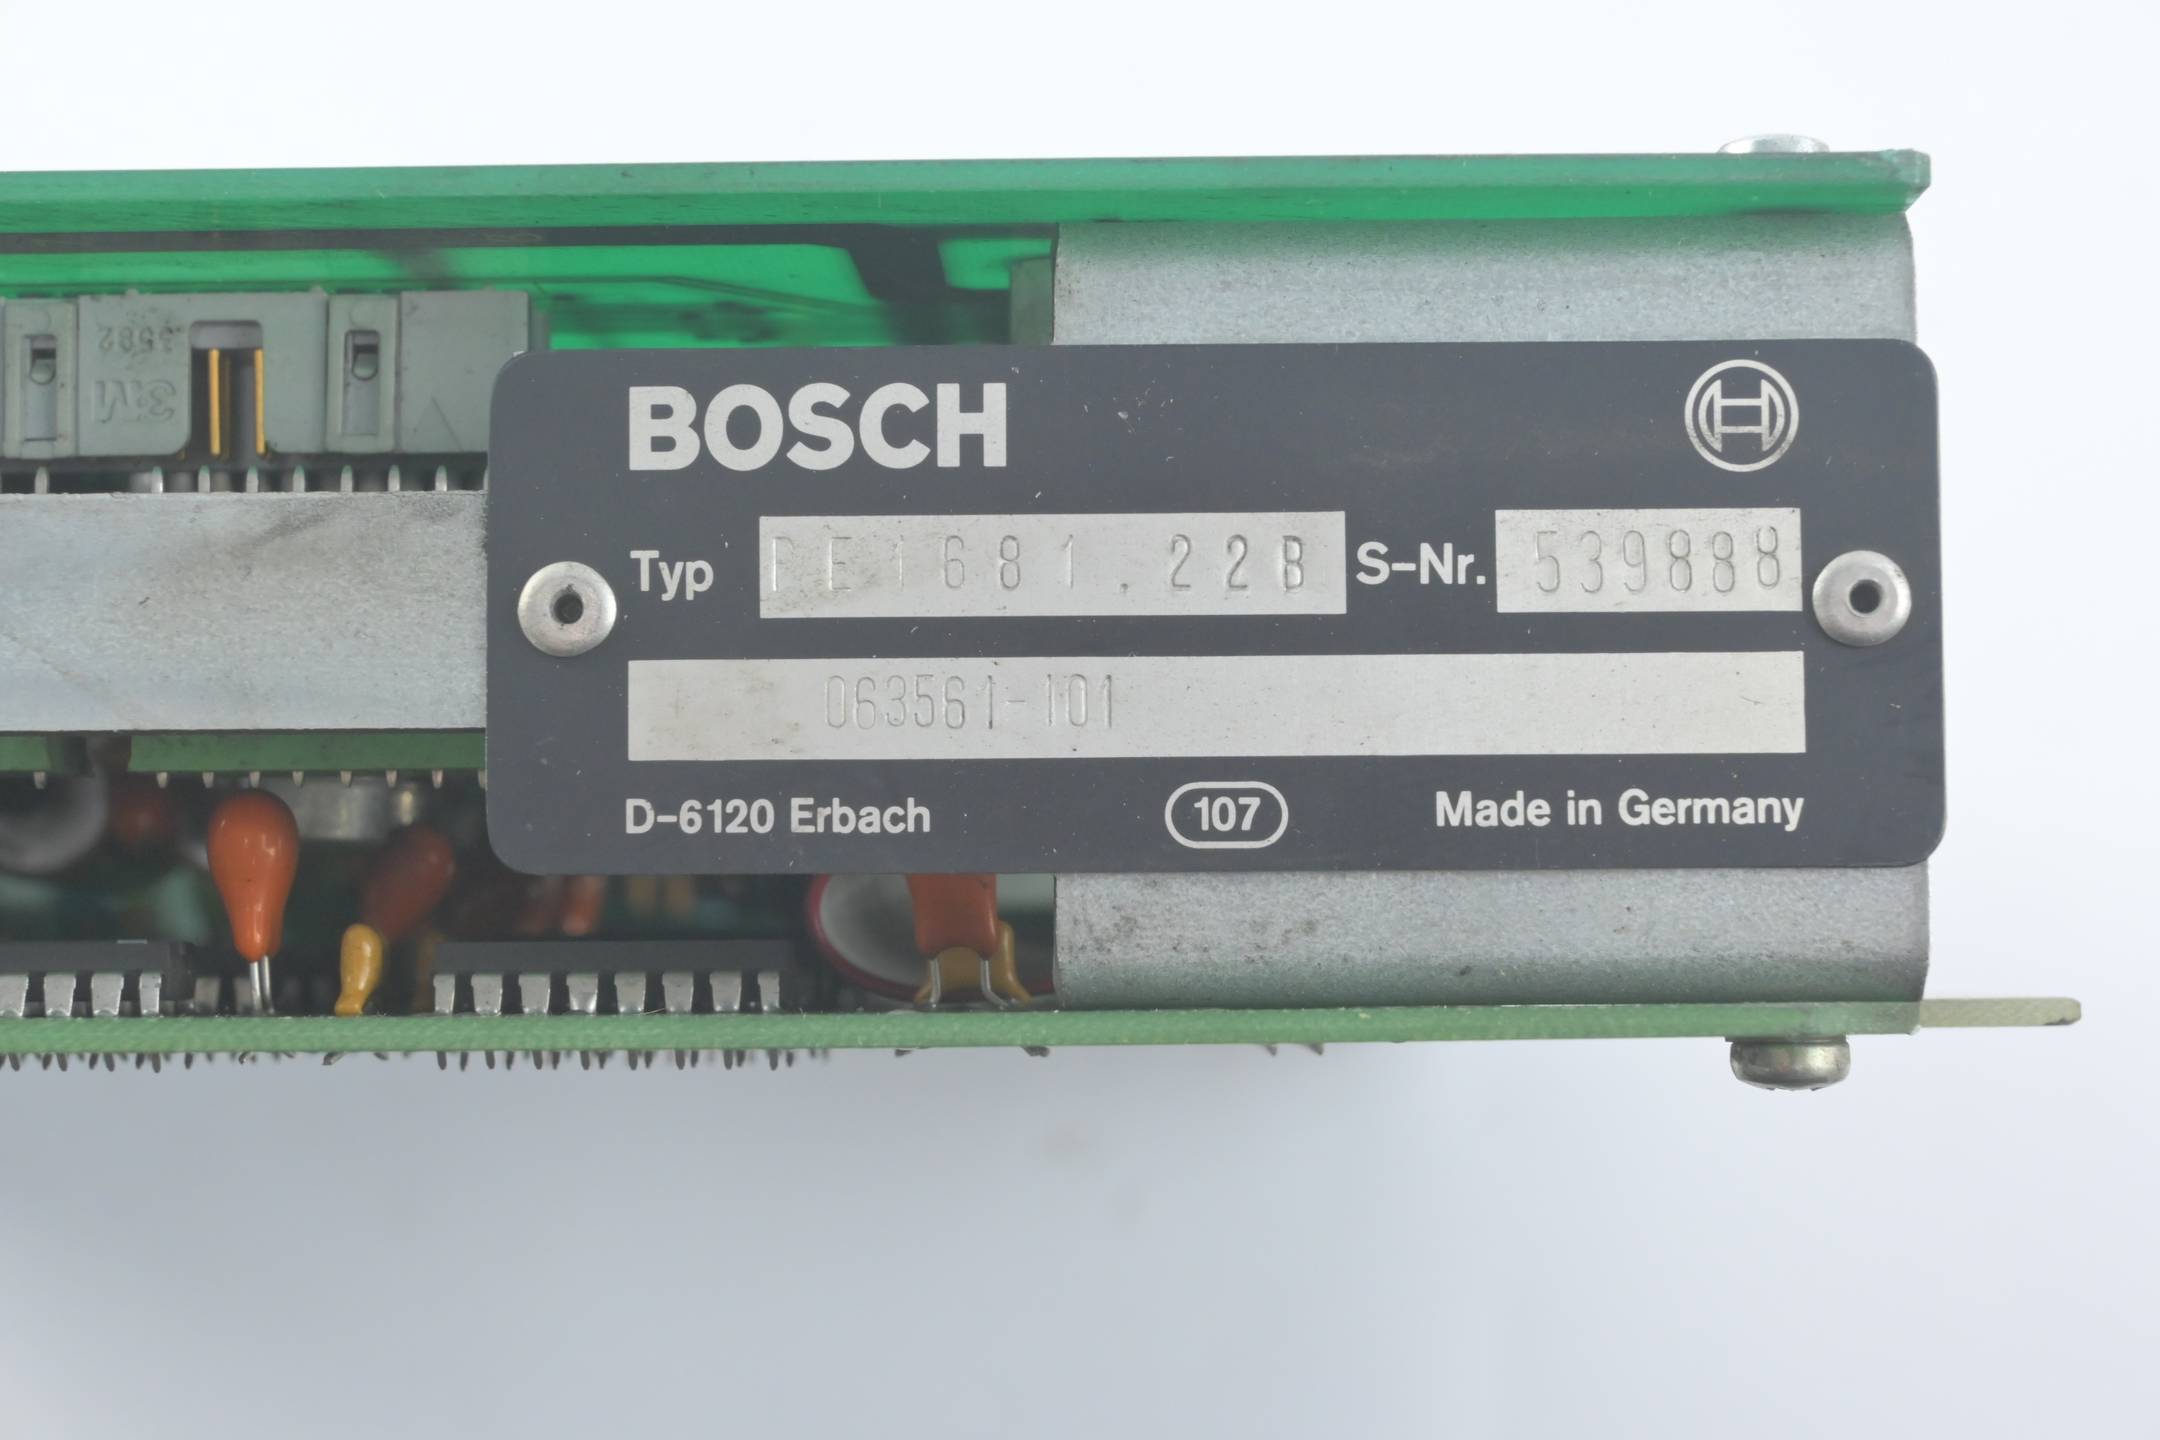 Bosch PE1681.22B ( 063561-101 )